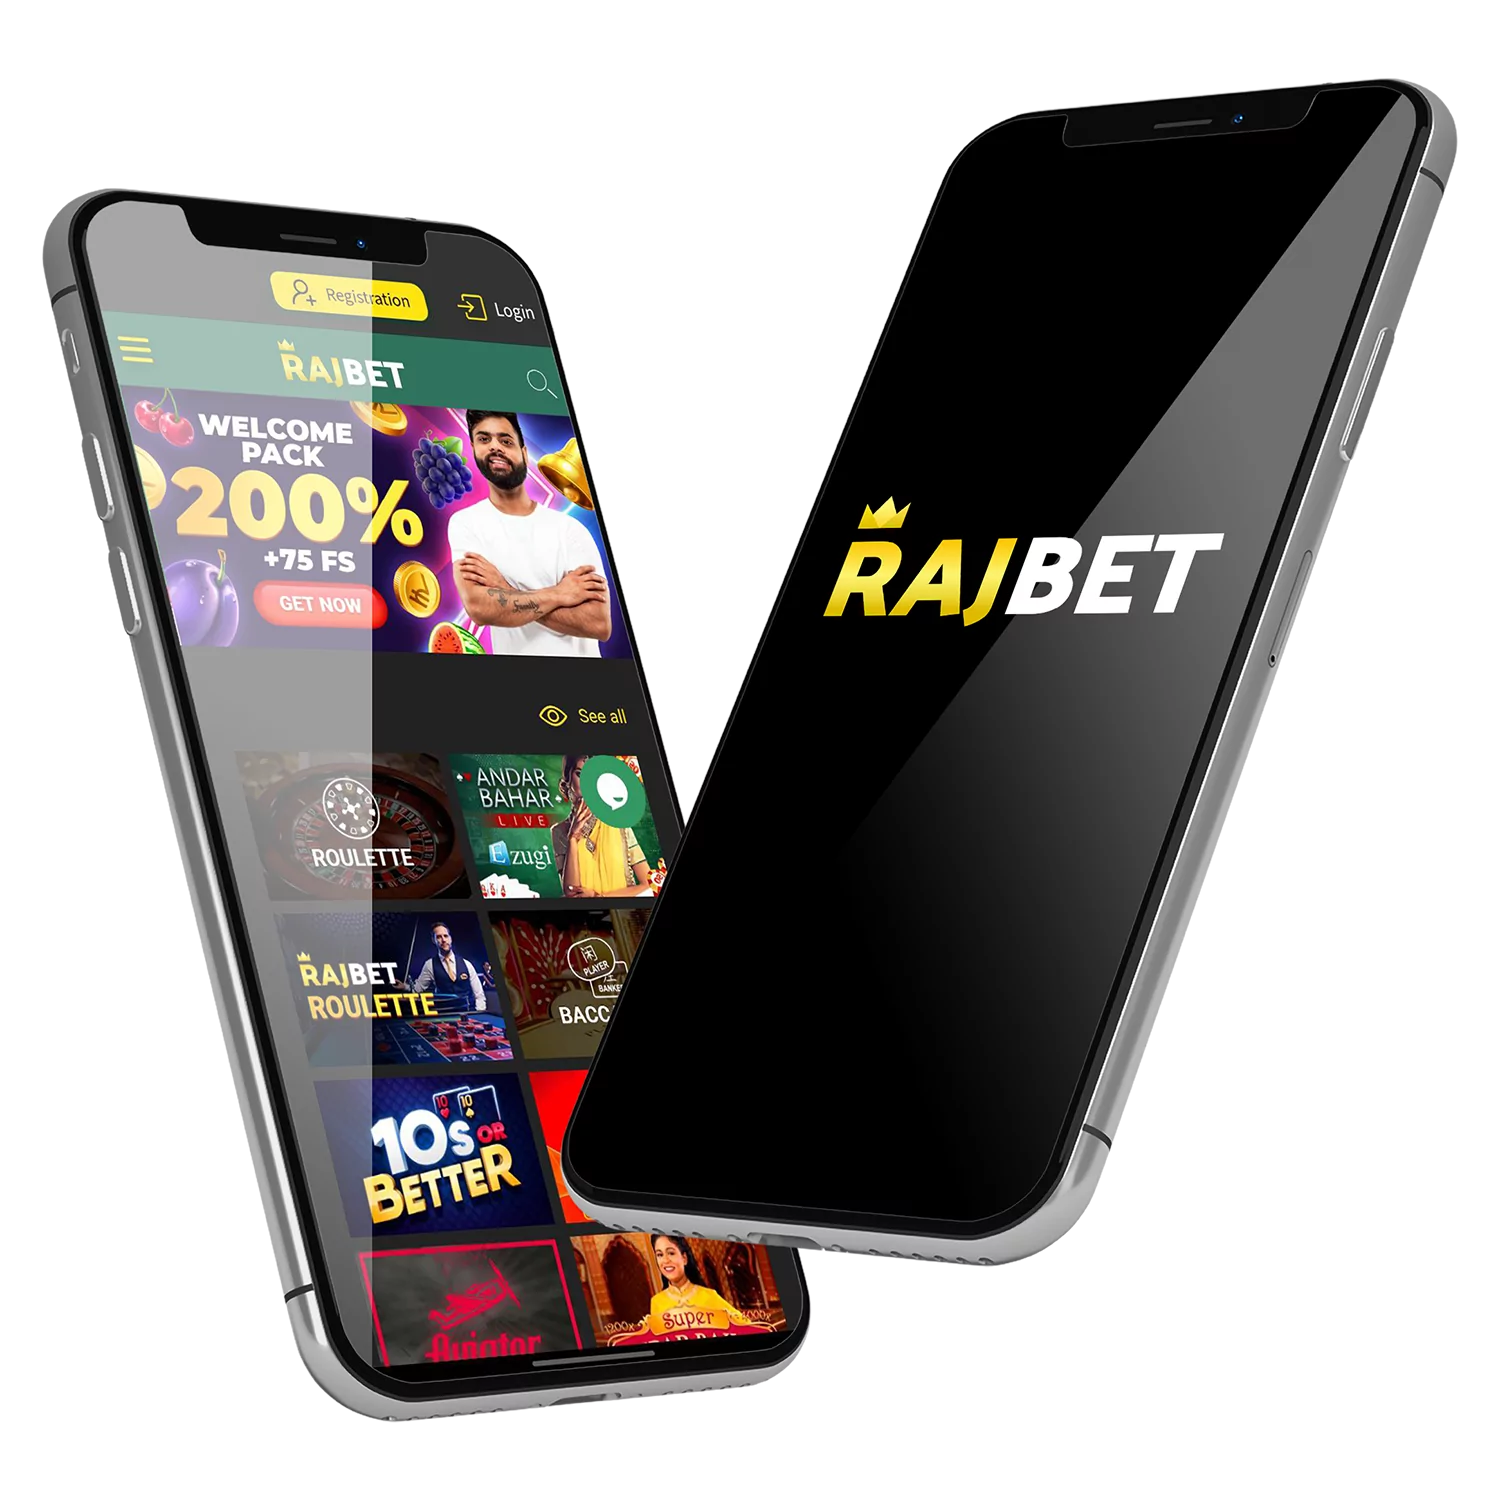 Rajbet Betting App